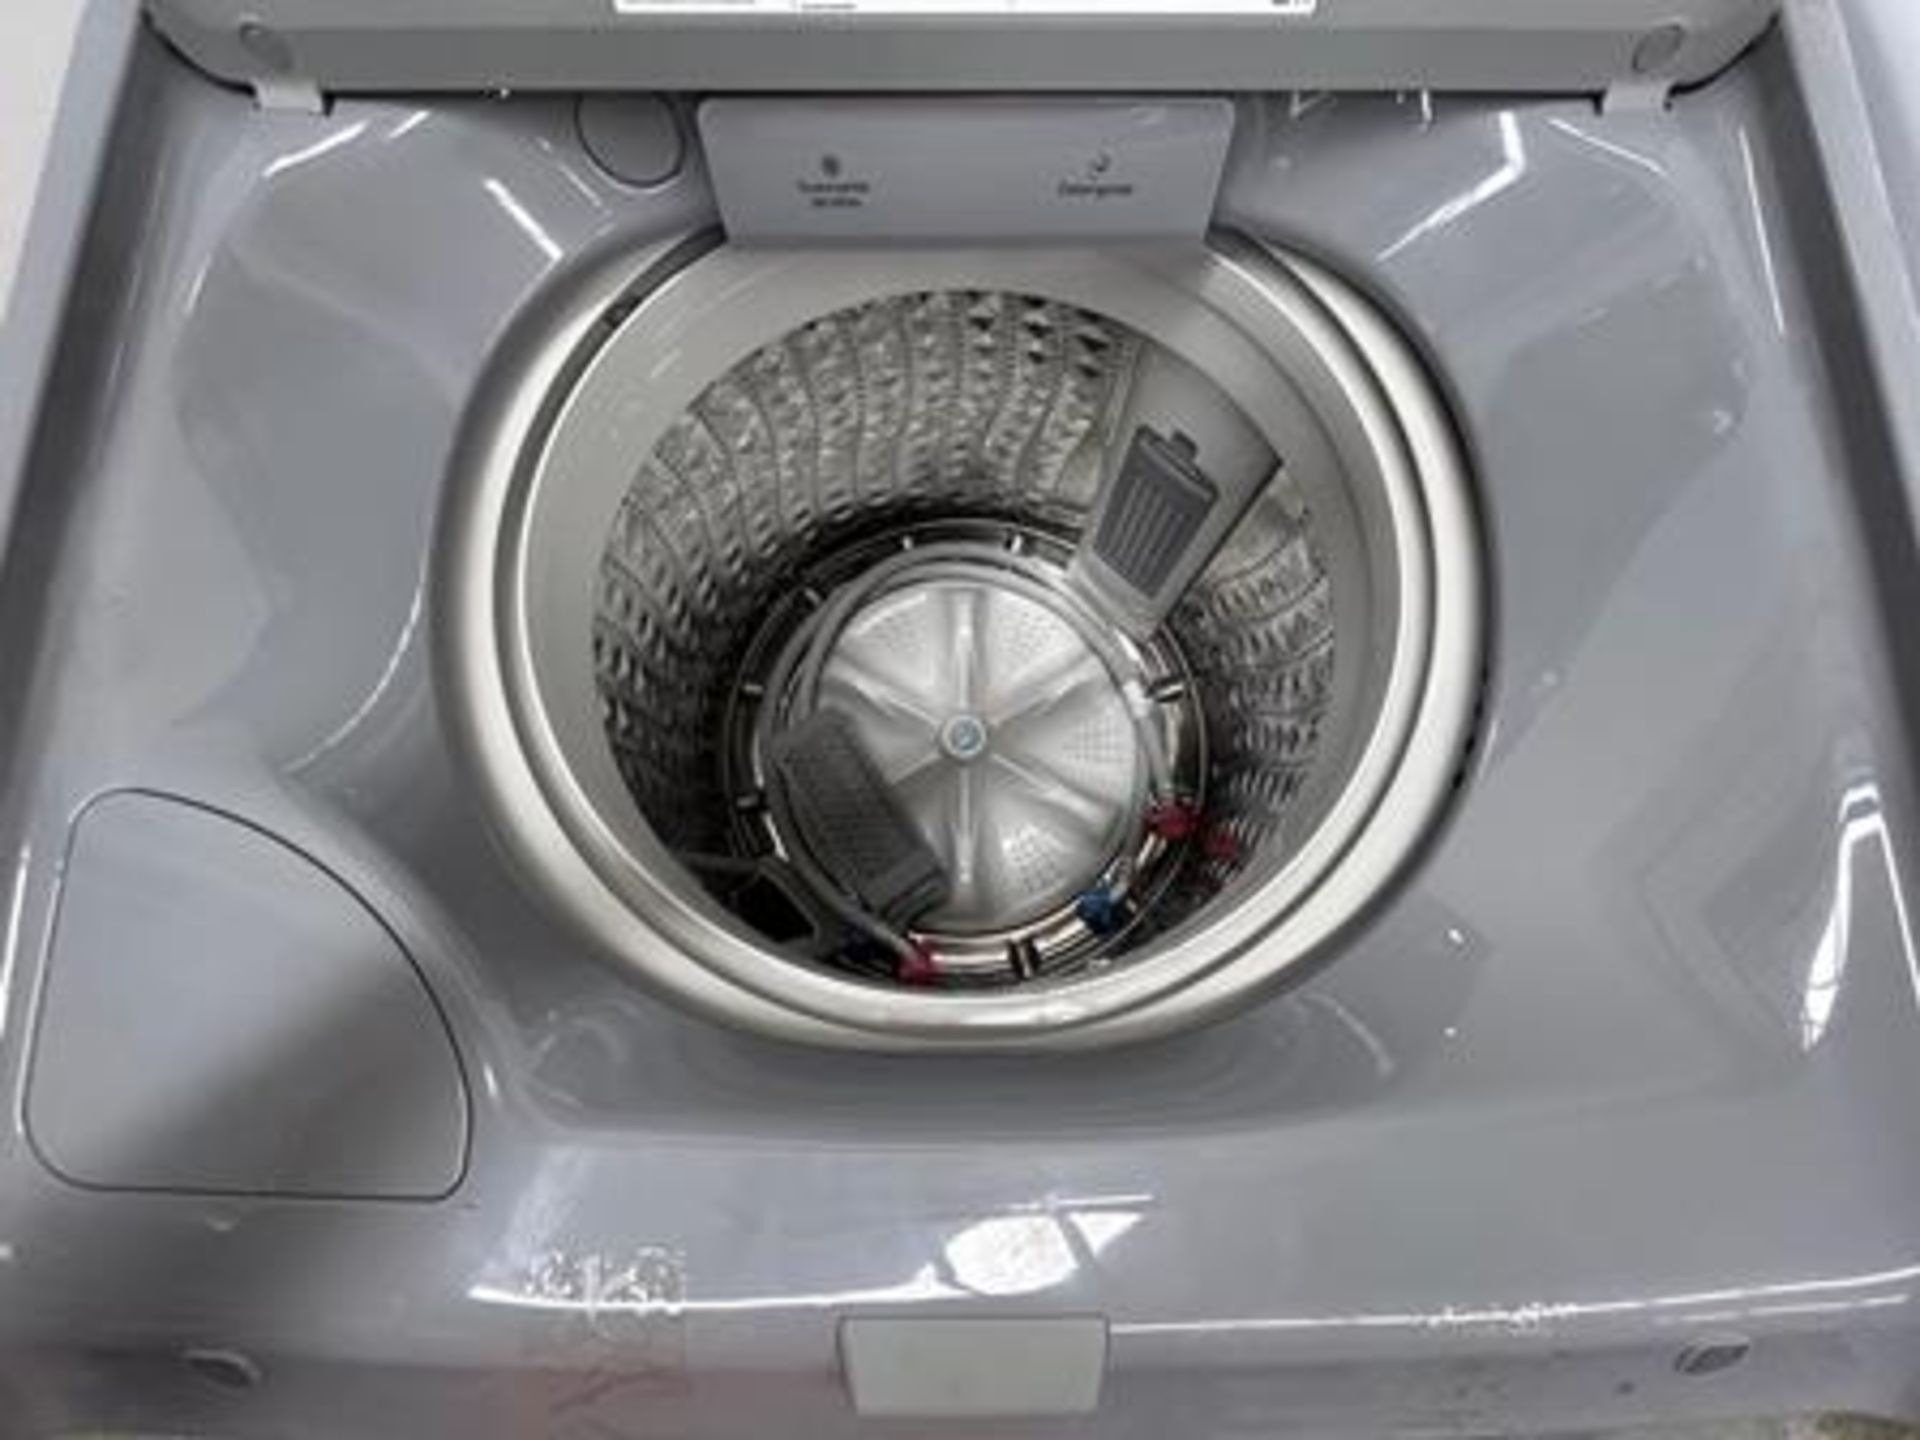 Lote de 2 lavadoras, Contiene: 1 lavadora de 21 Kg Marca LG, Modelo WT21VV6, Serie P2W506, Color NE - Image 4 of 9